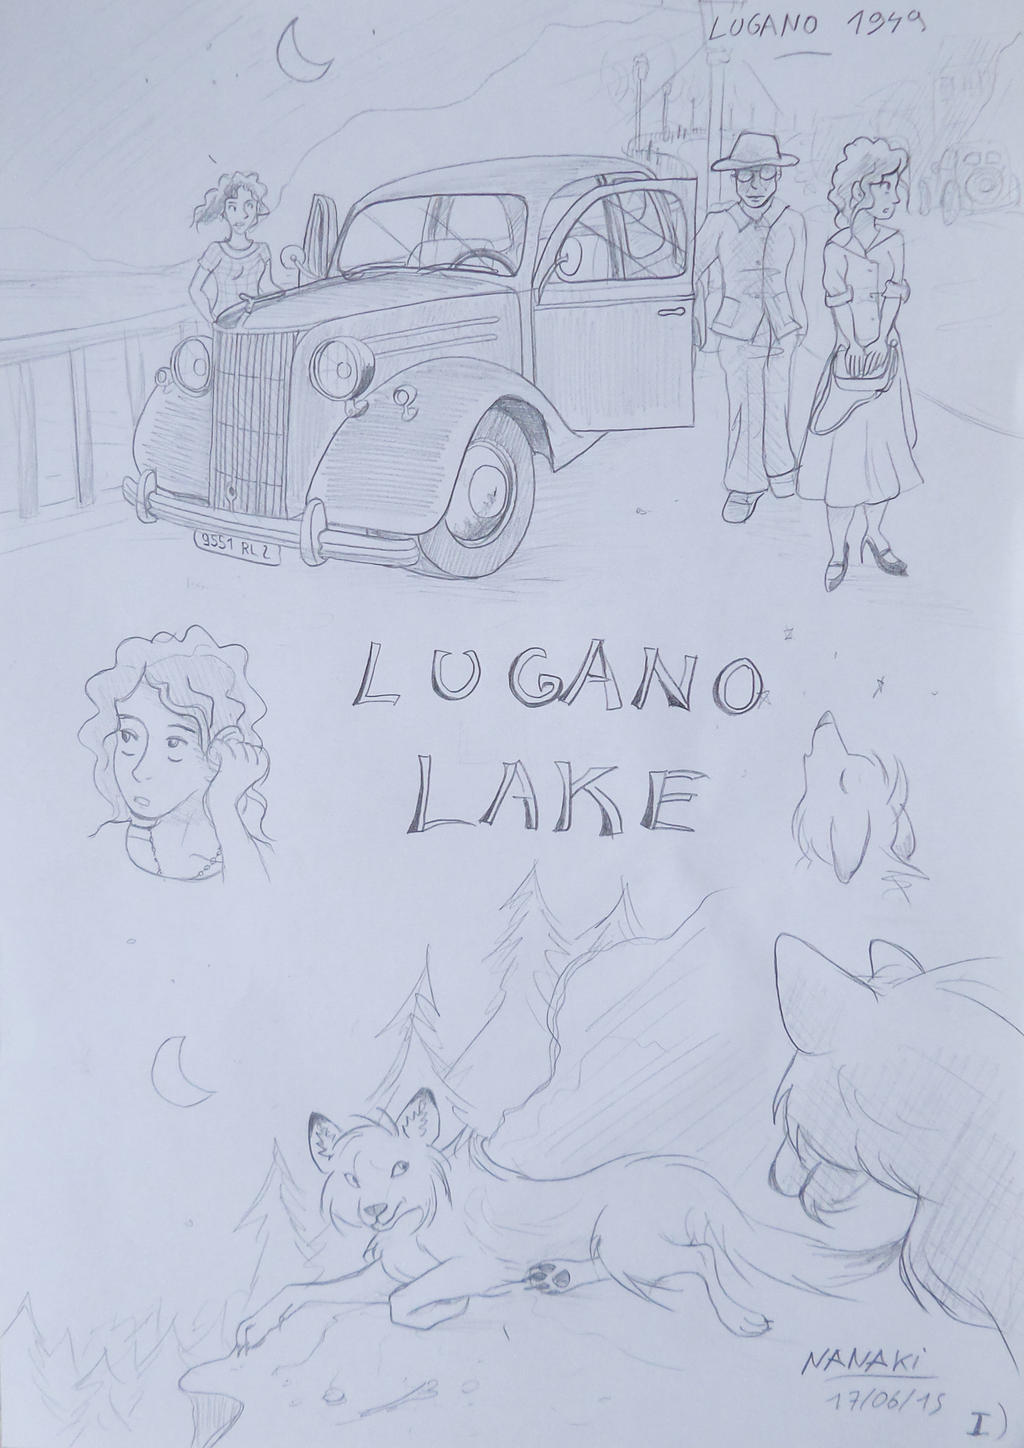 lugano_lake_1949___lpallad_request_by_draggane-d8y5chj